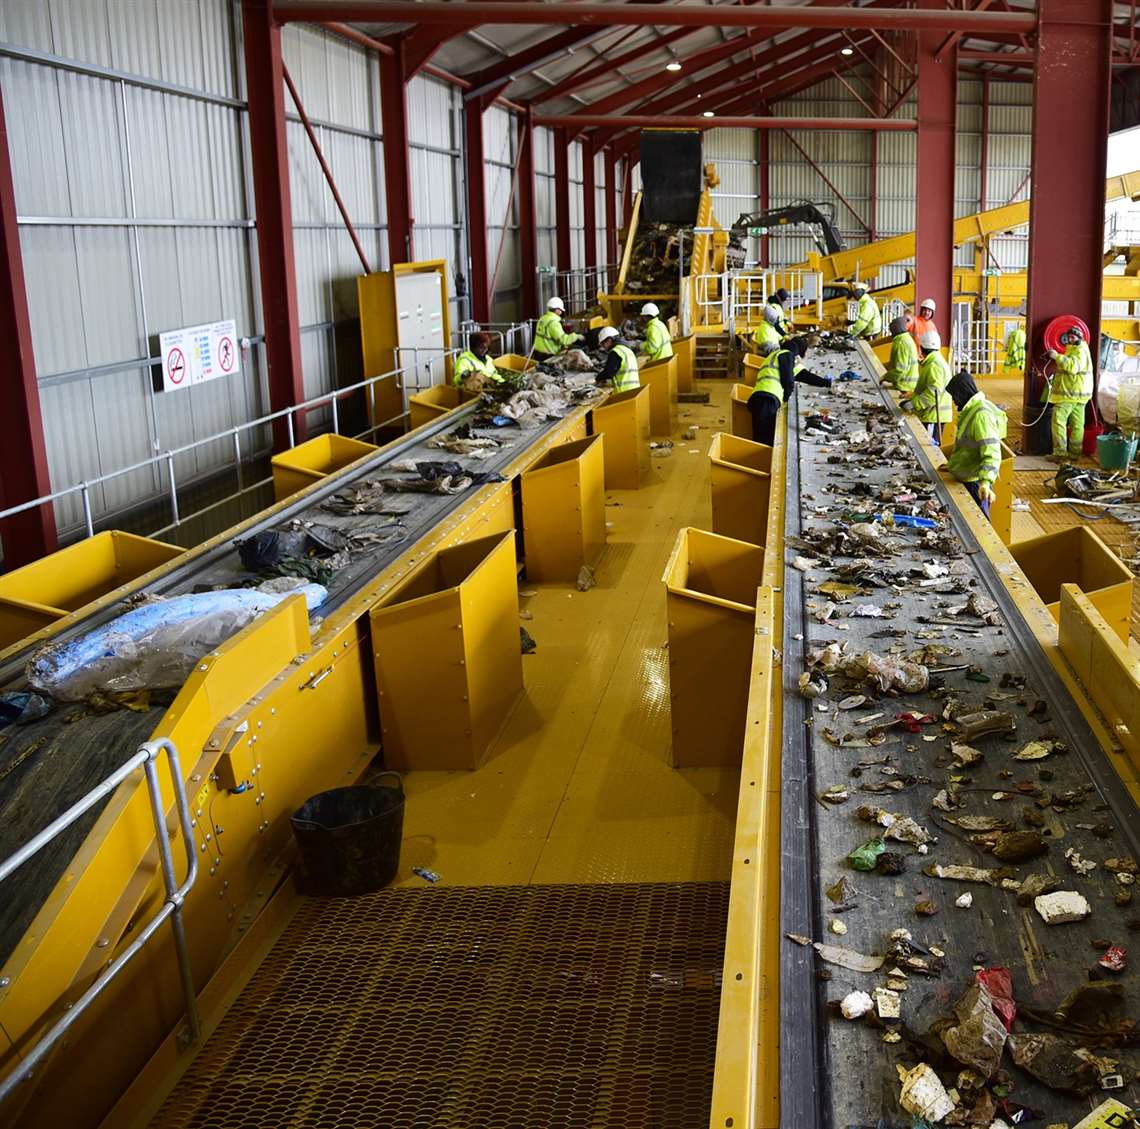 Sharp Skips' Kiverco recycling plant in Essex